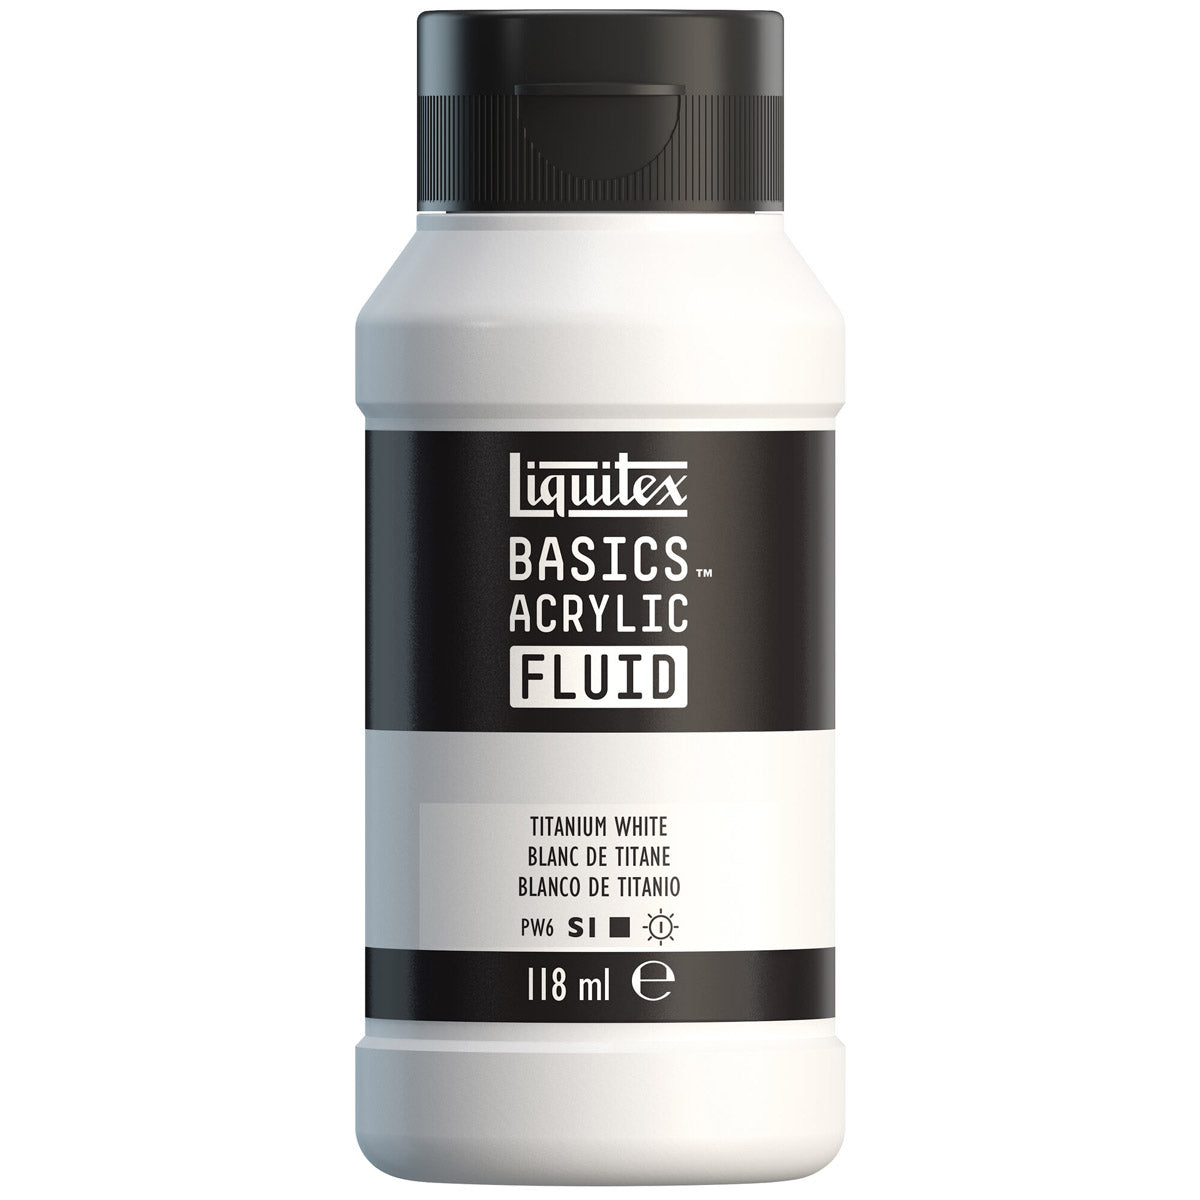 Liquitex Basics Fluid Acrylic 118ml - Titanium White S1